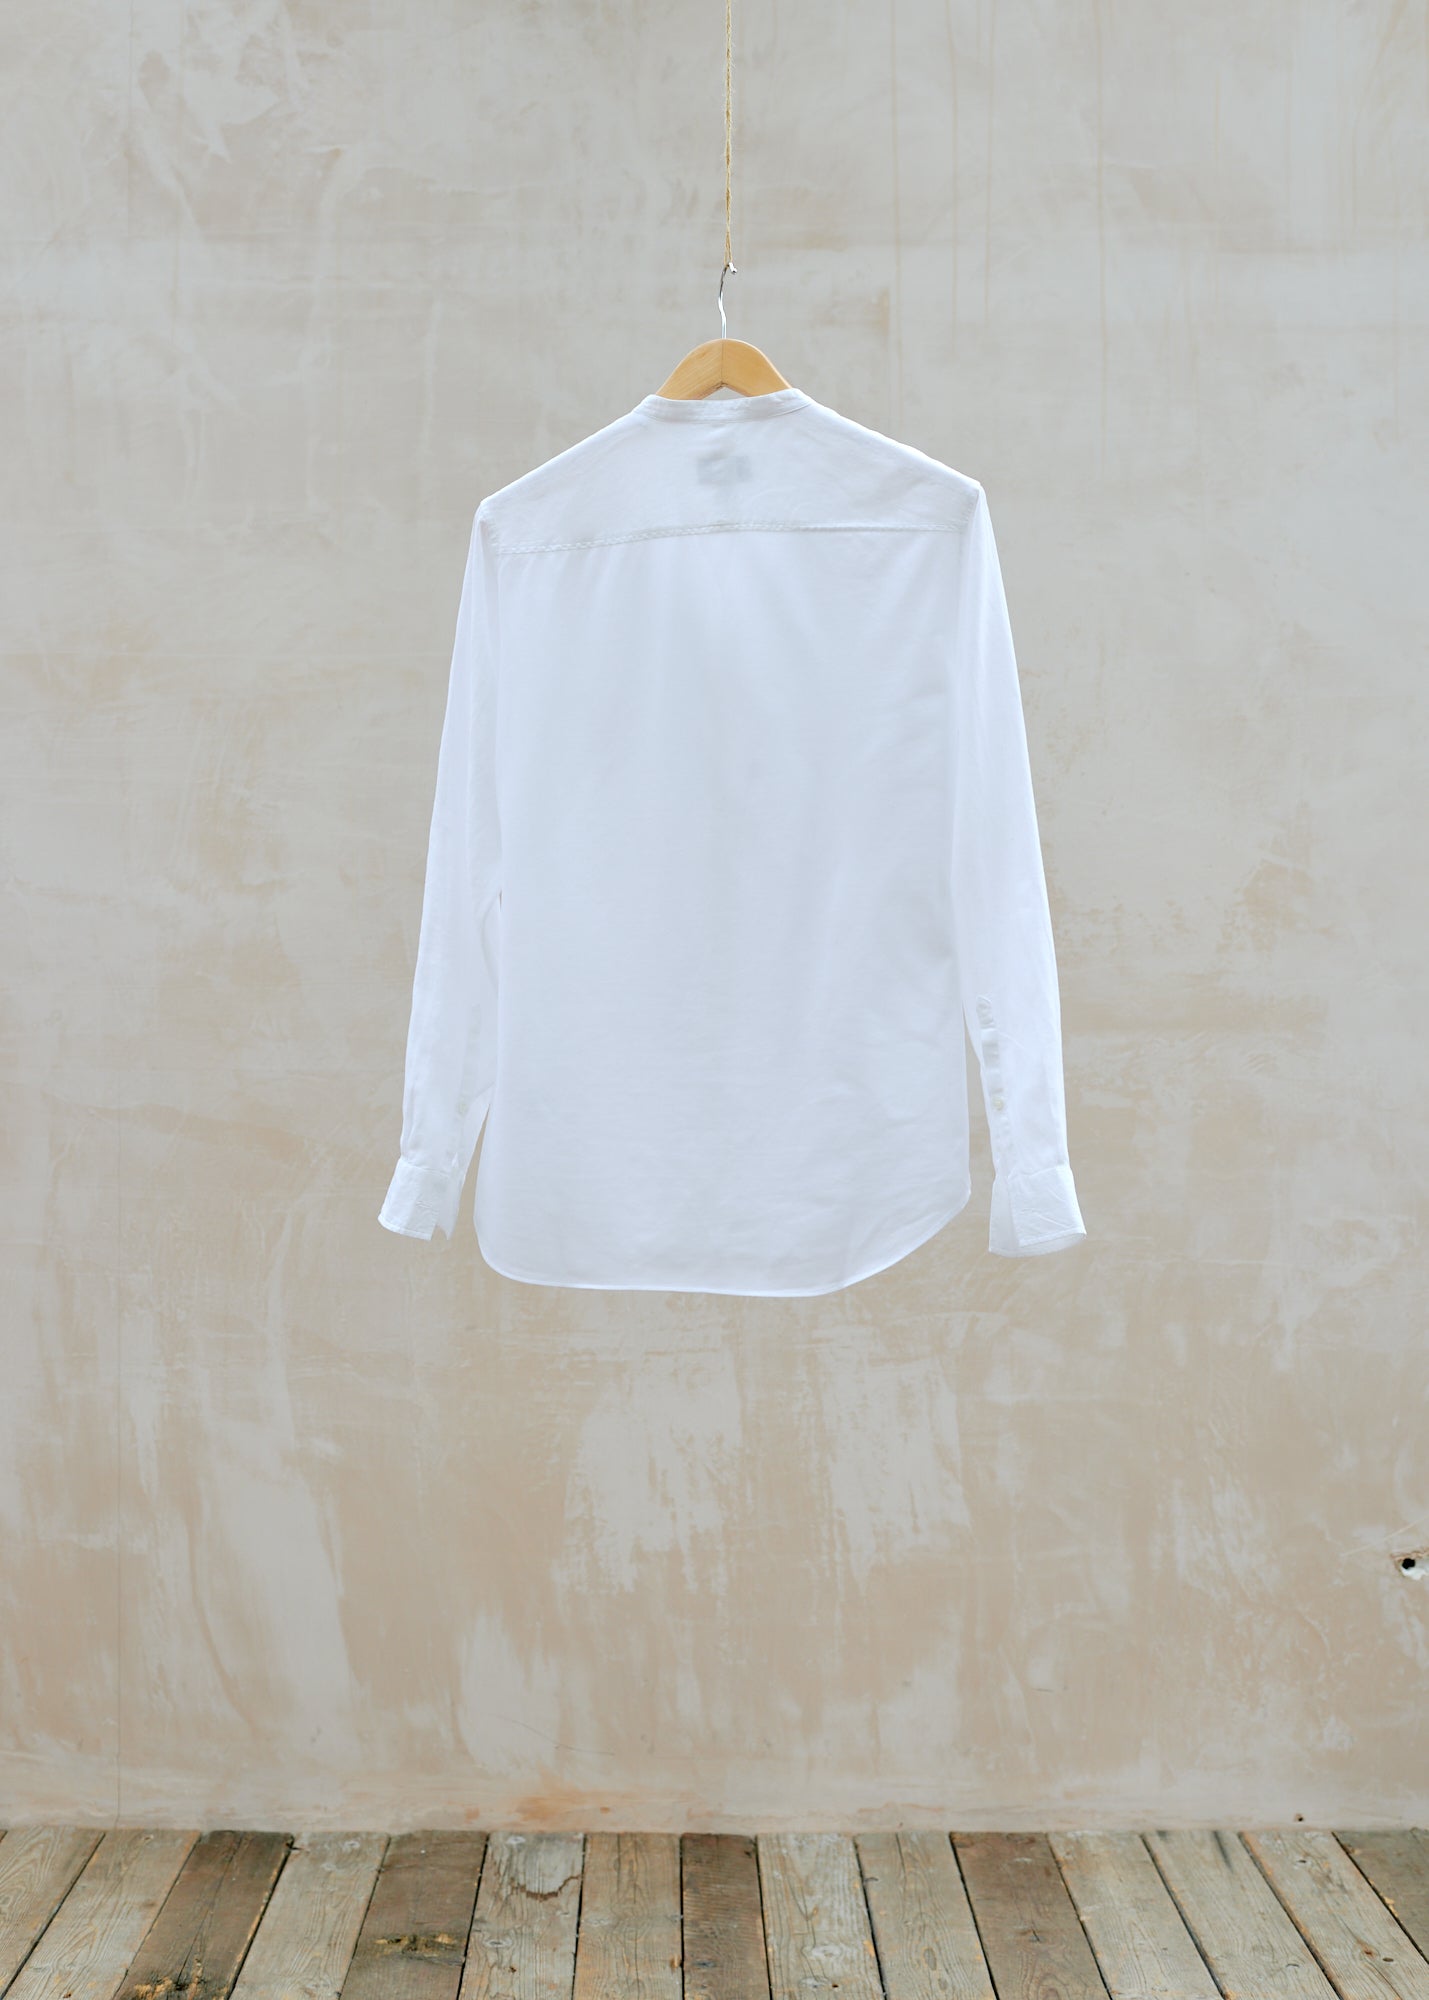 Dunhill White Linen Collarless Shirt W Pique Back - S/M